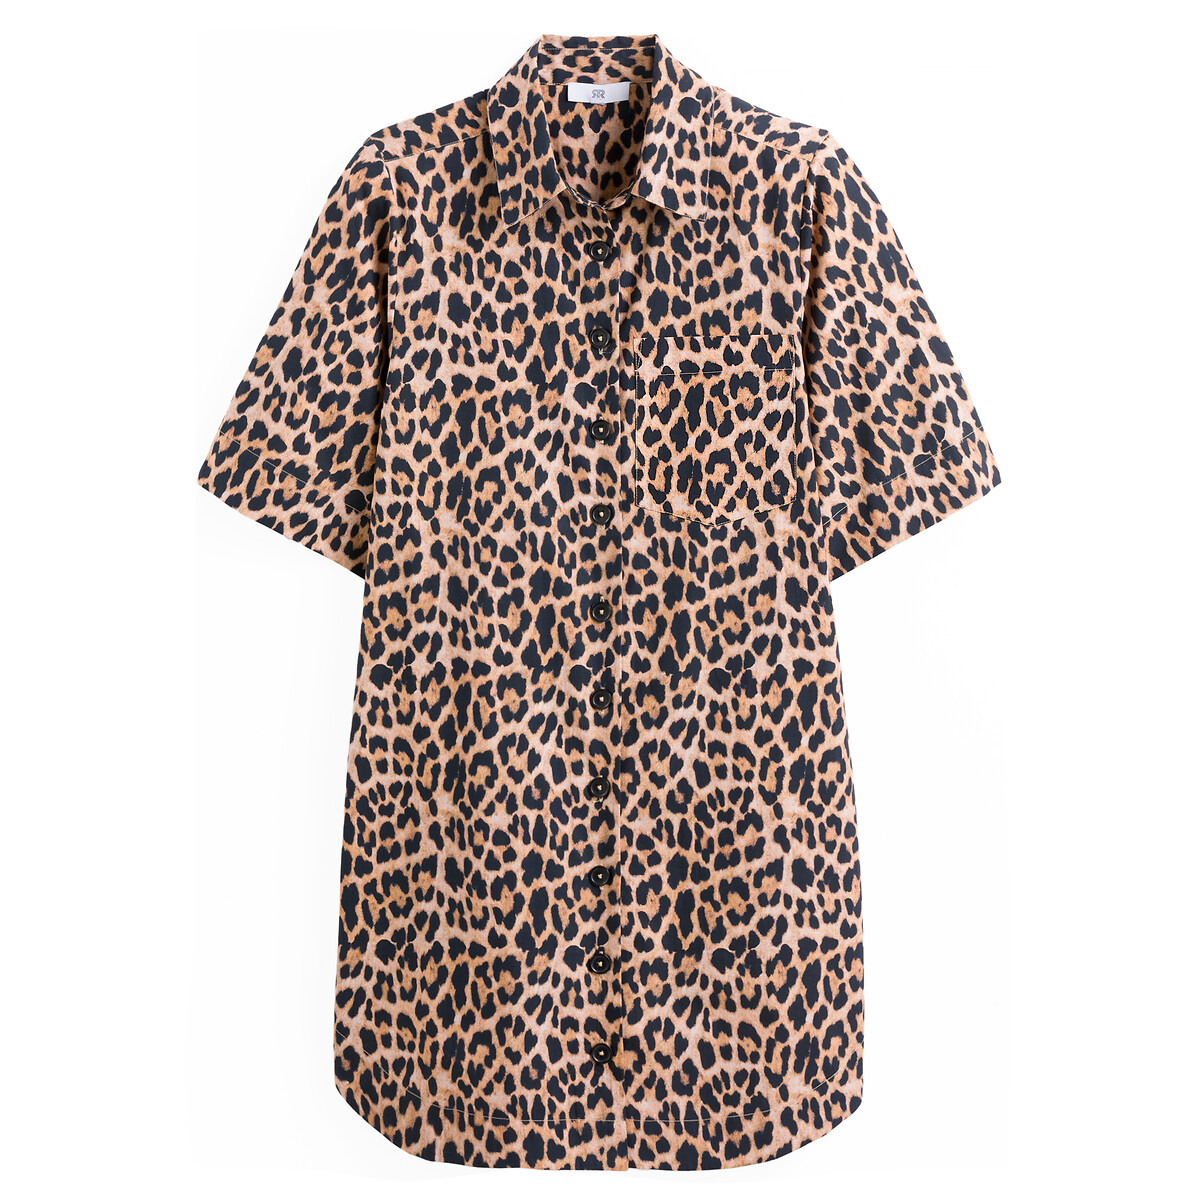 Платье-рубашка Короткое короткие рукава с леопардовым принтом 50 другие LaRedoute, размер 50 - фото 5